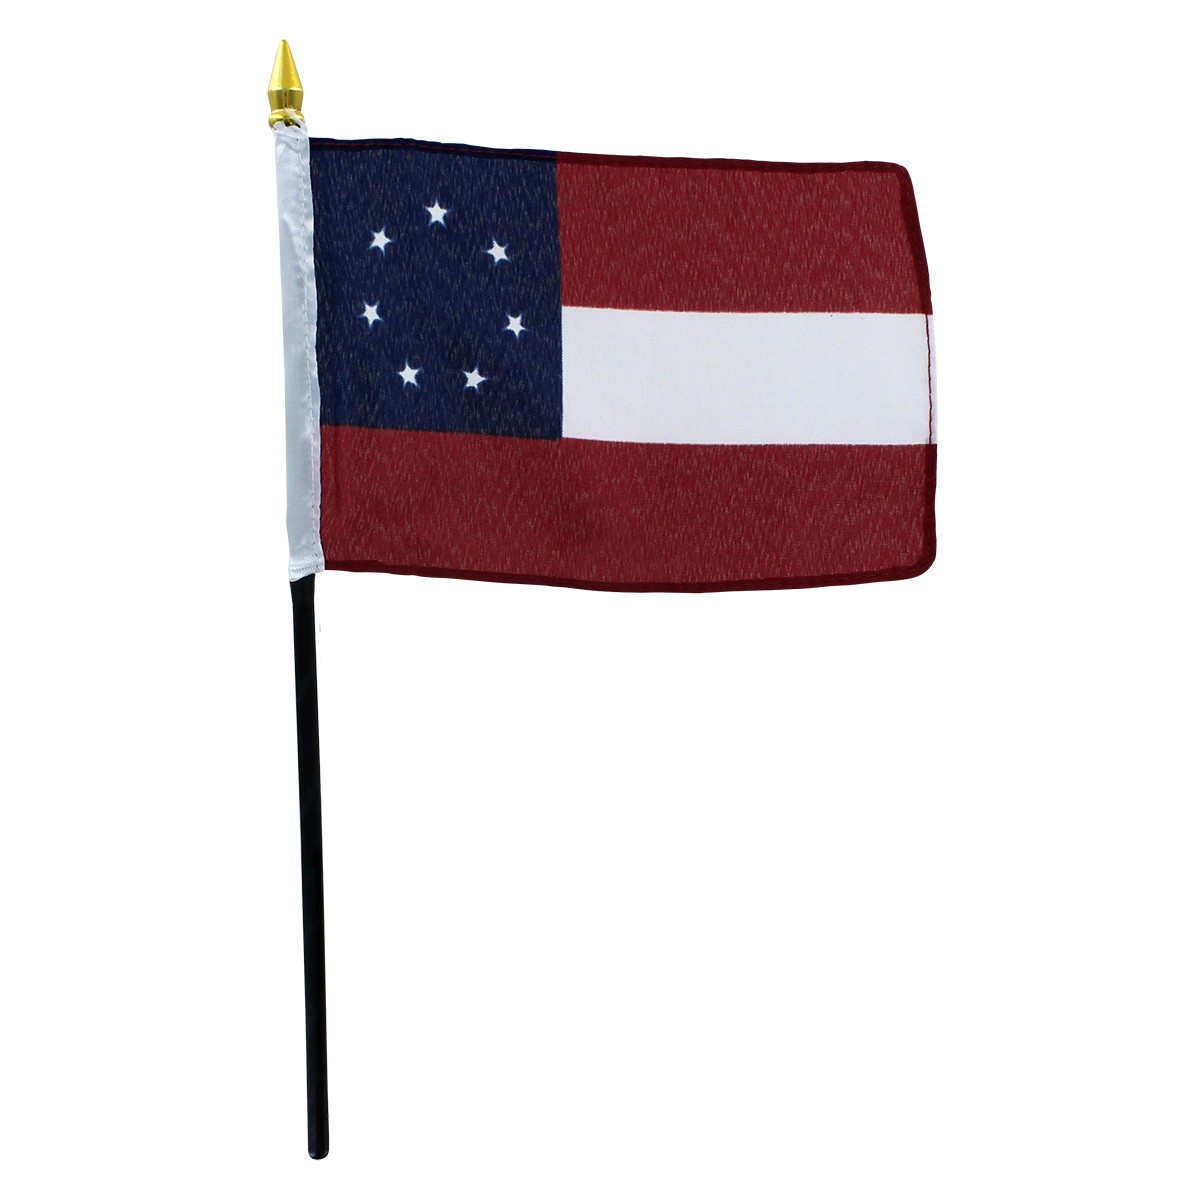 1st Confederate flag 4 x 6 inch